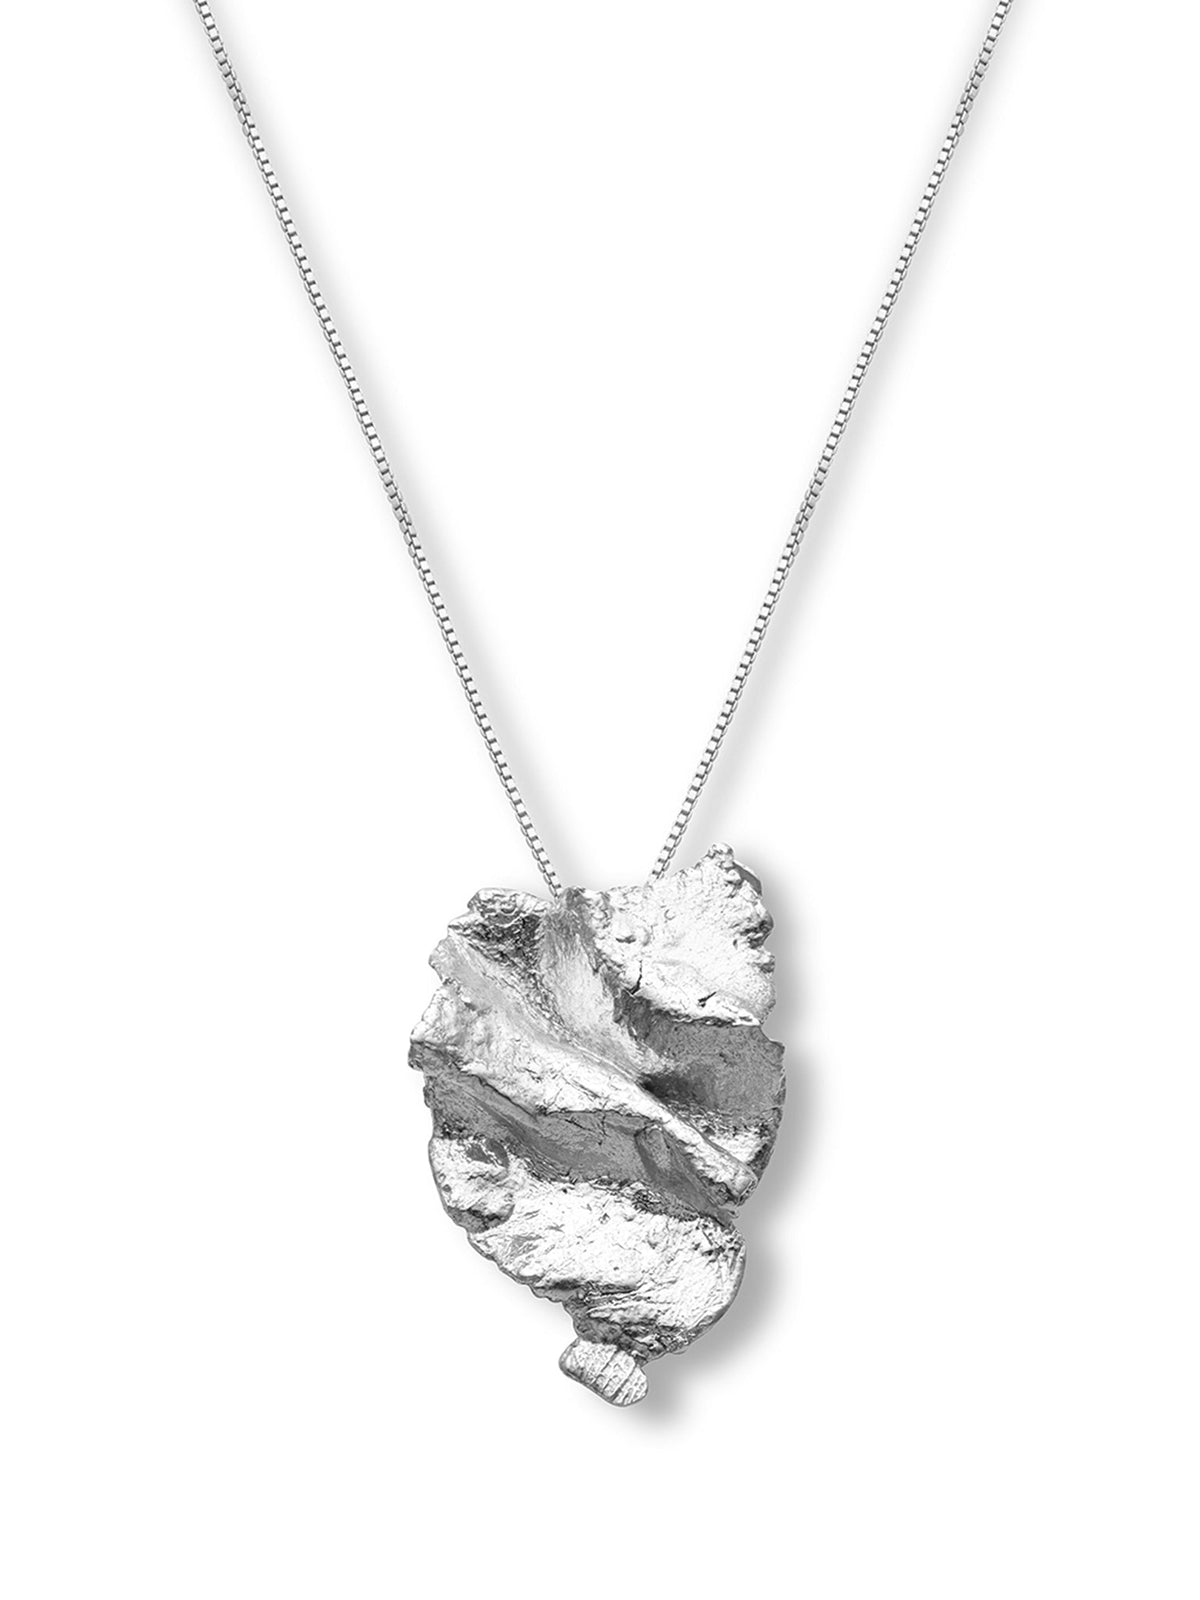 Artemis Necklace Silver